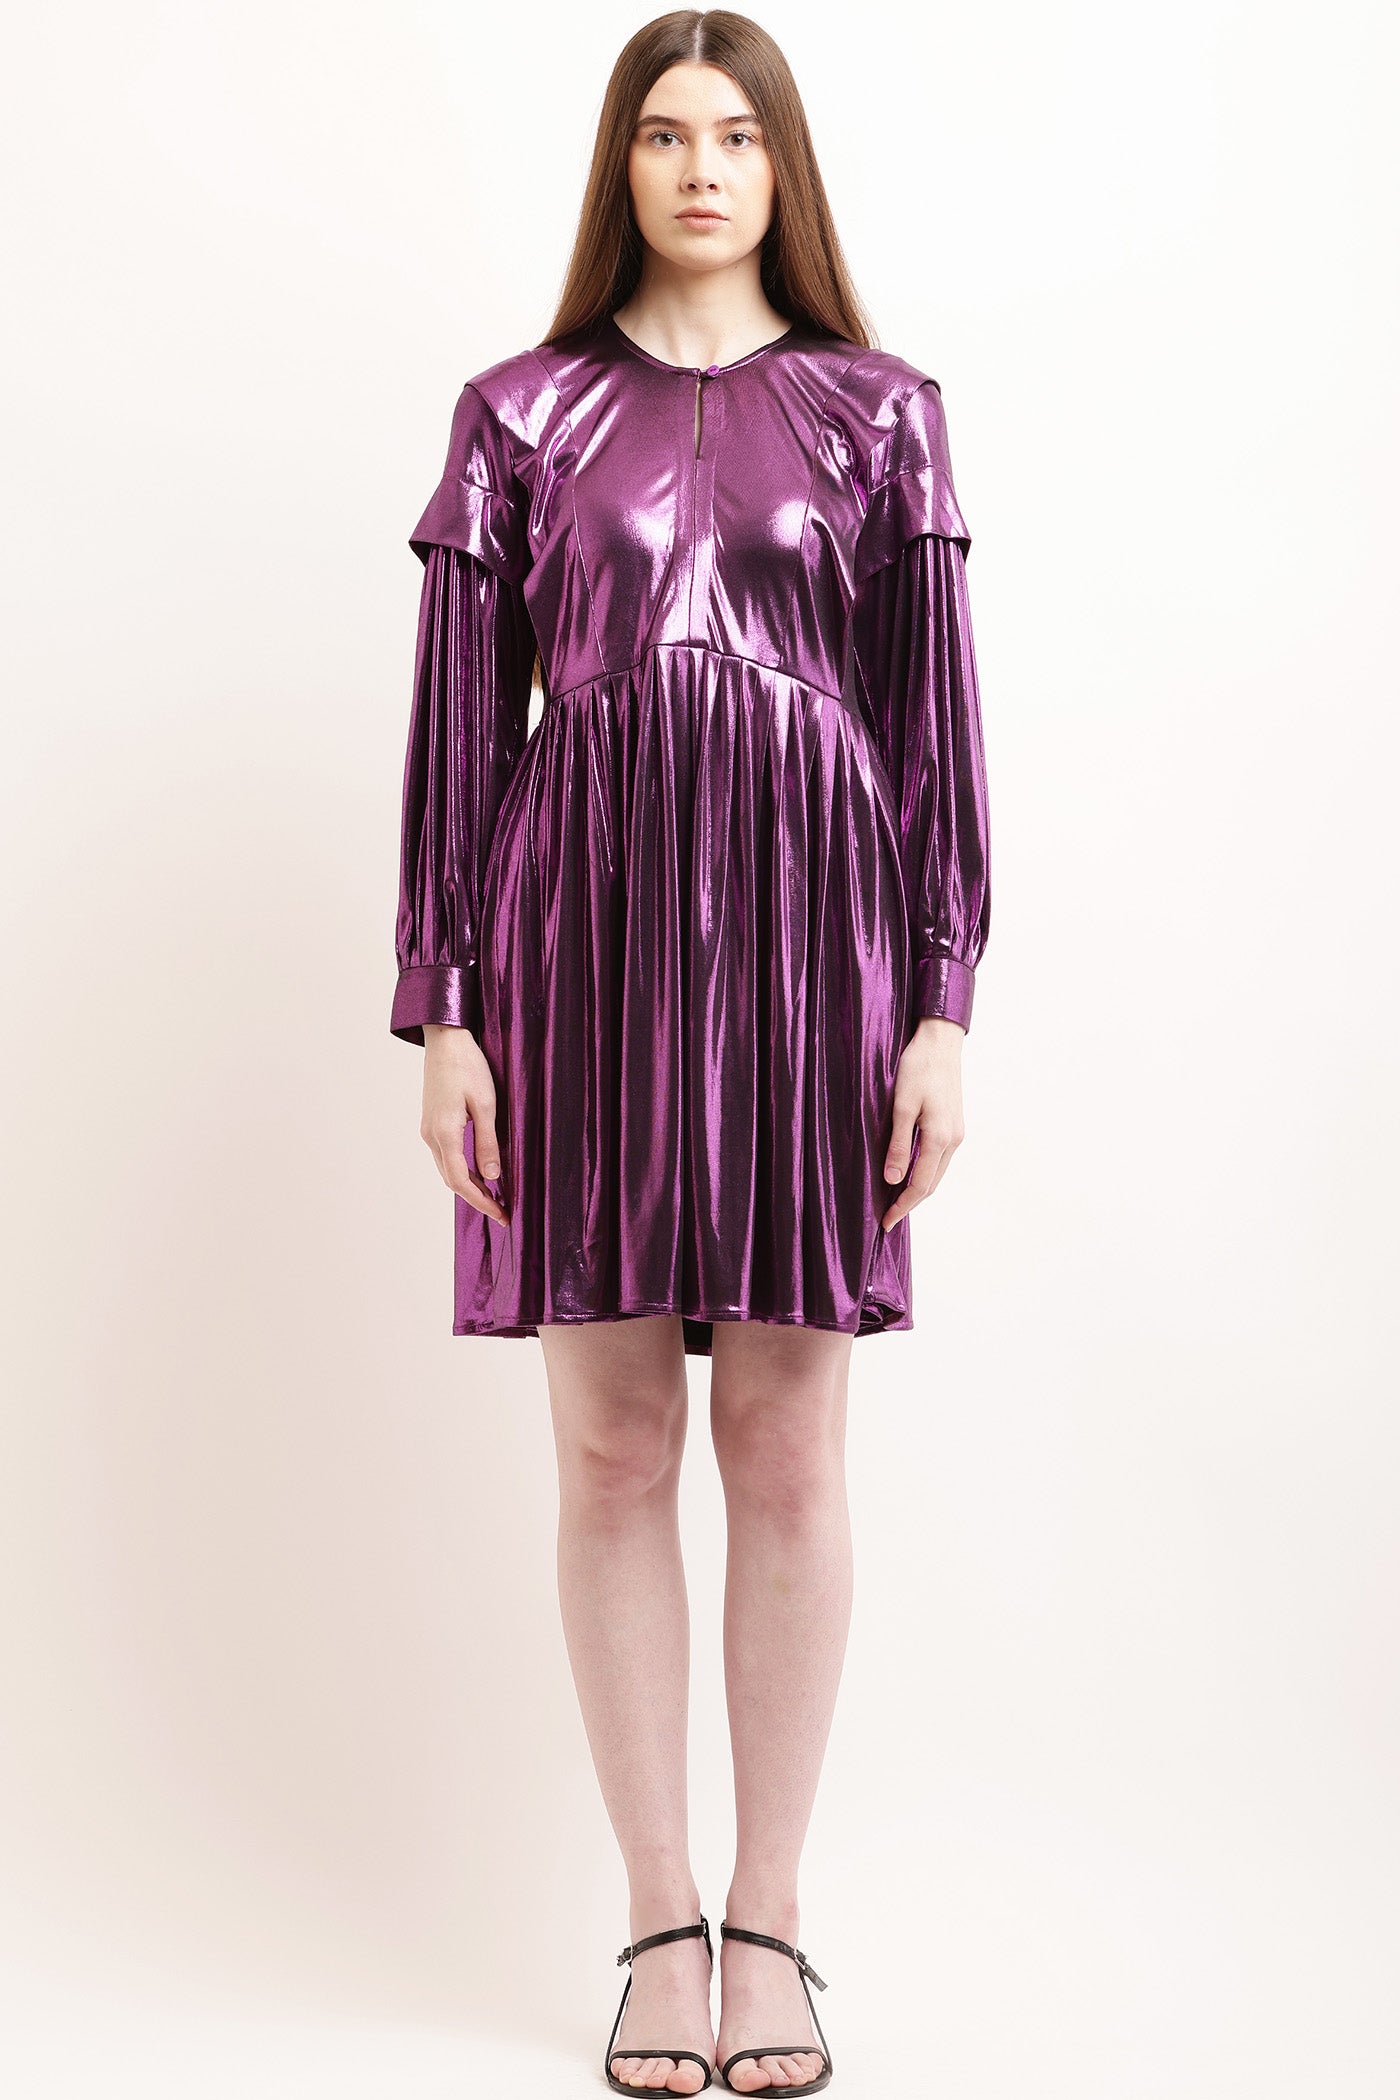 Purple Metallic Dress